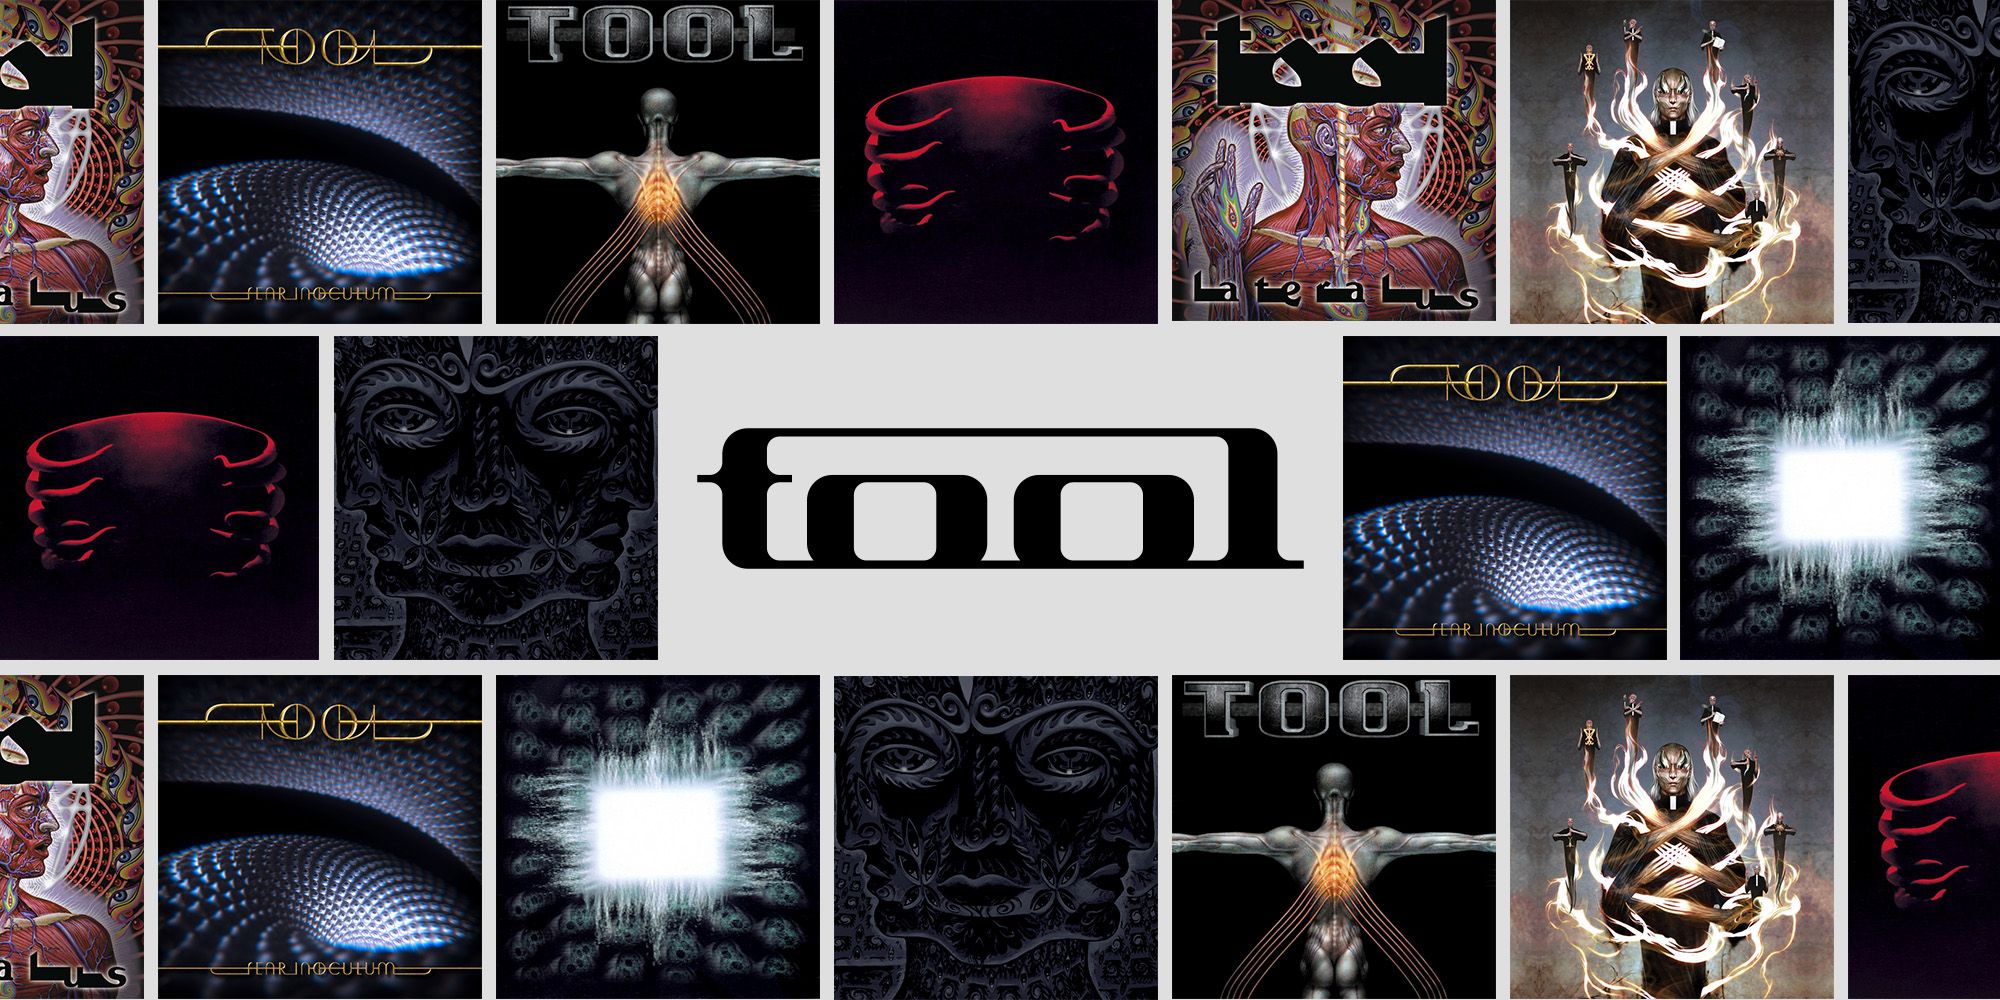 tool 10000 days album art controversary